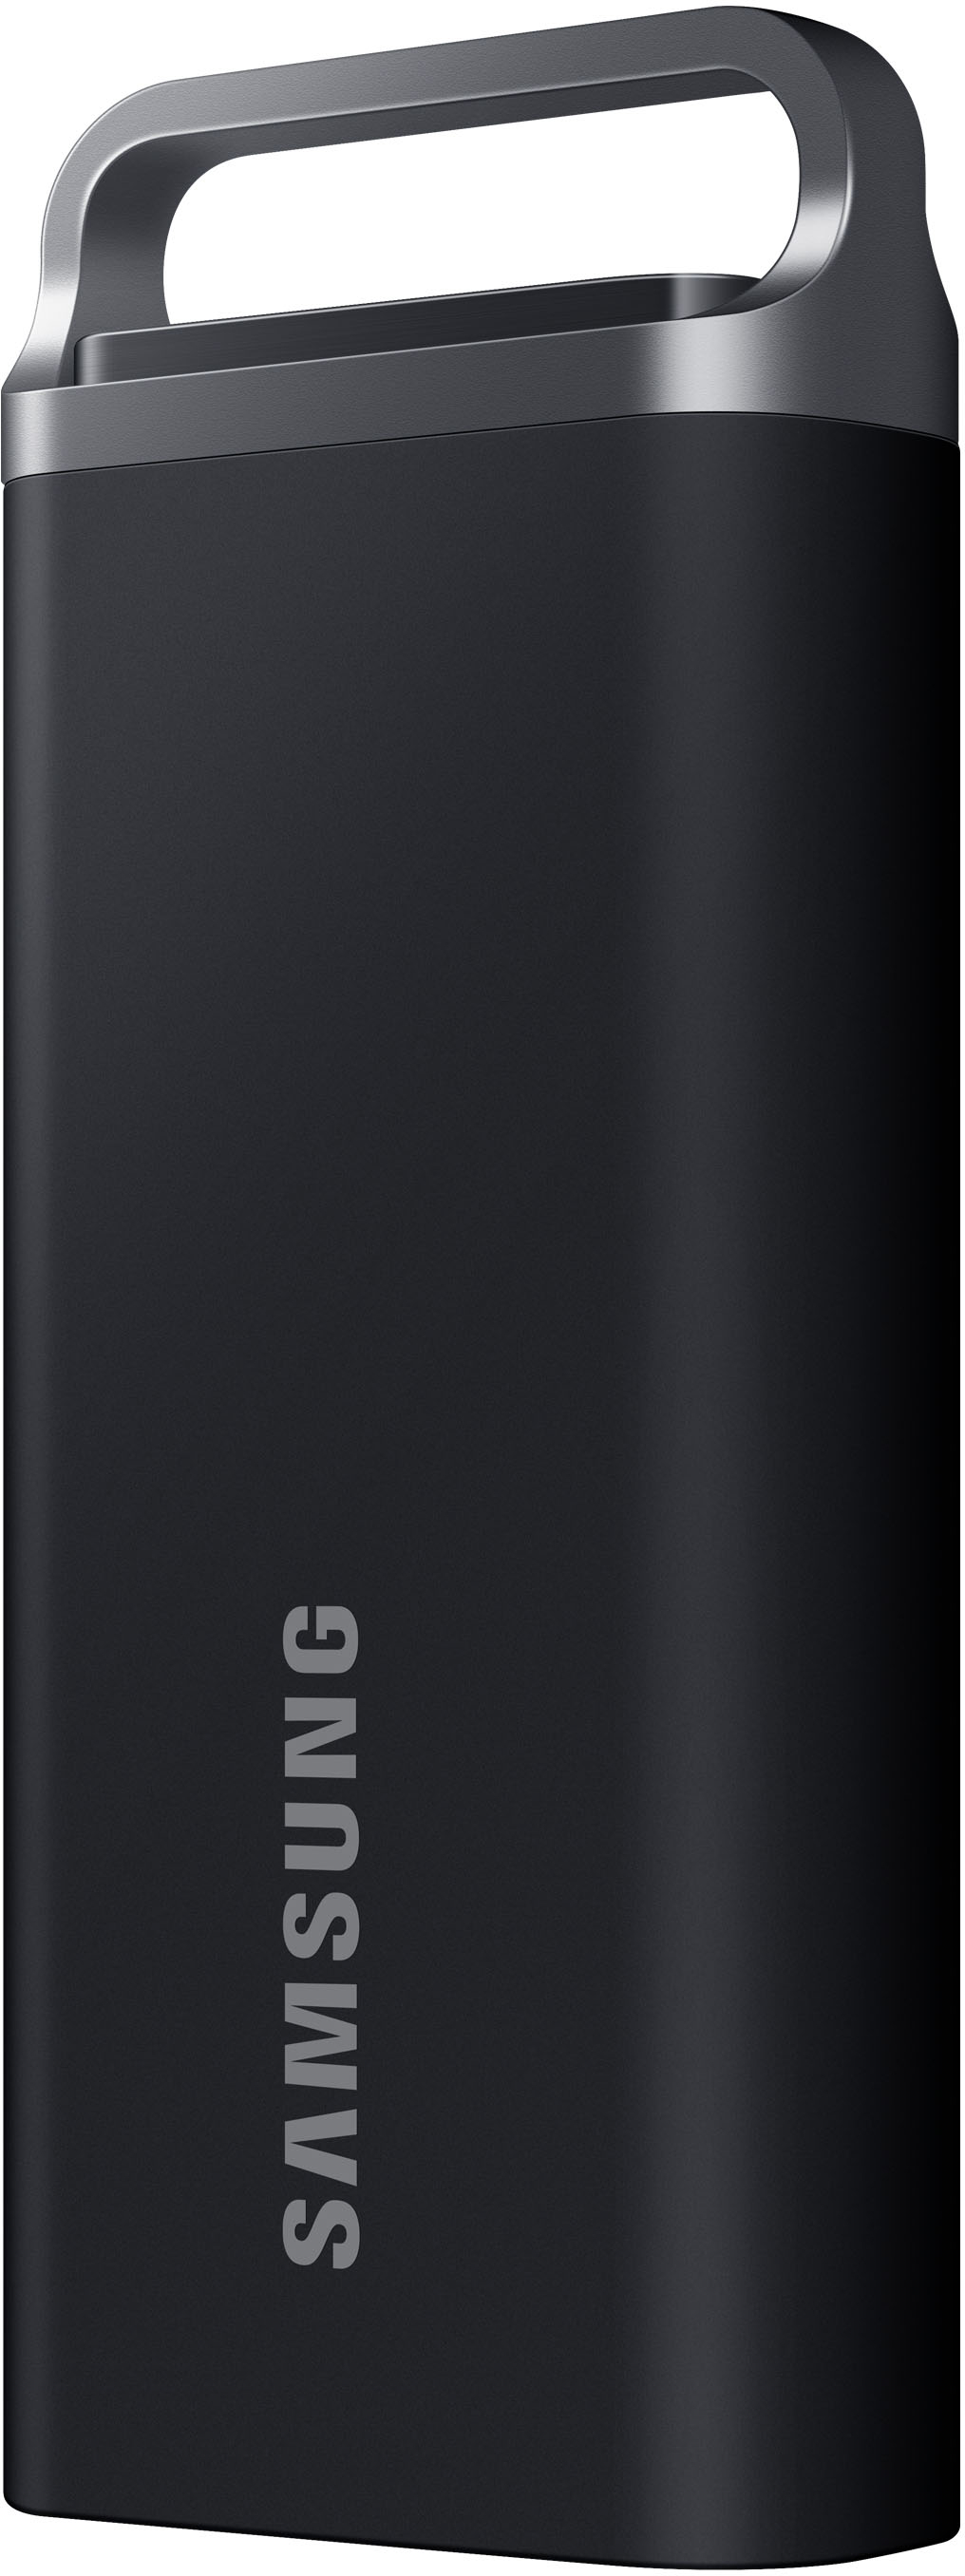 Samsung T5 Evo 2TB Portable SSD Drive